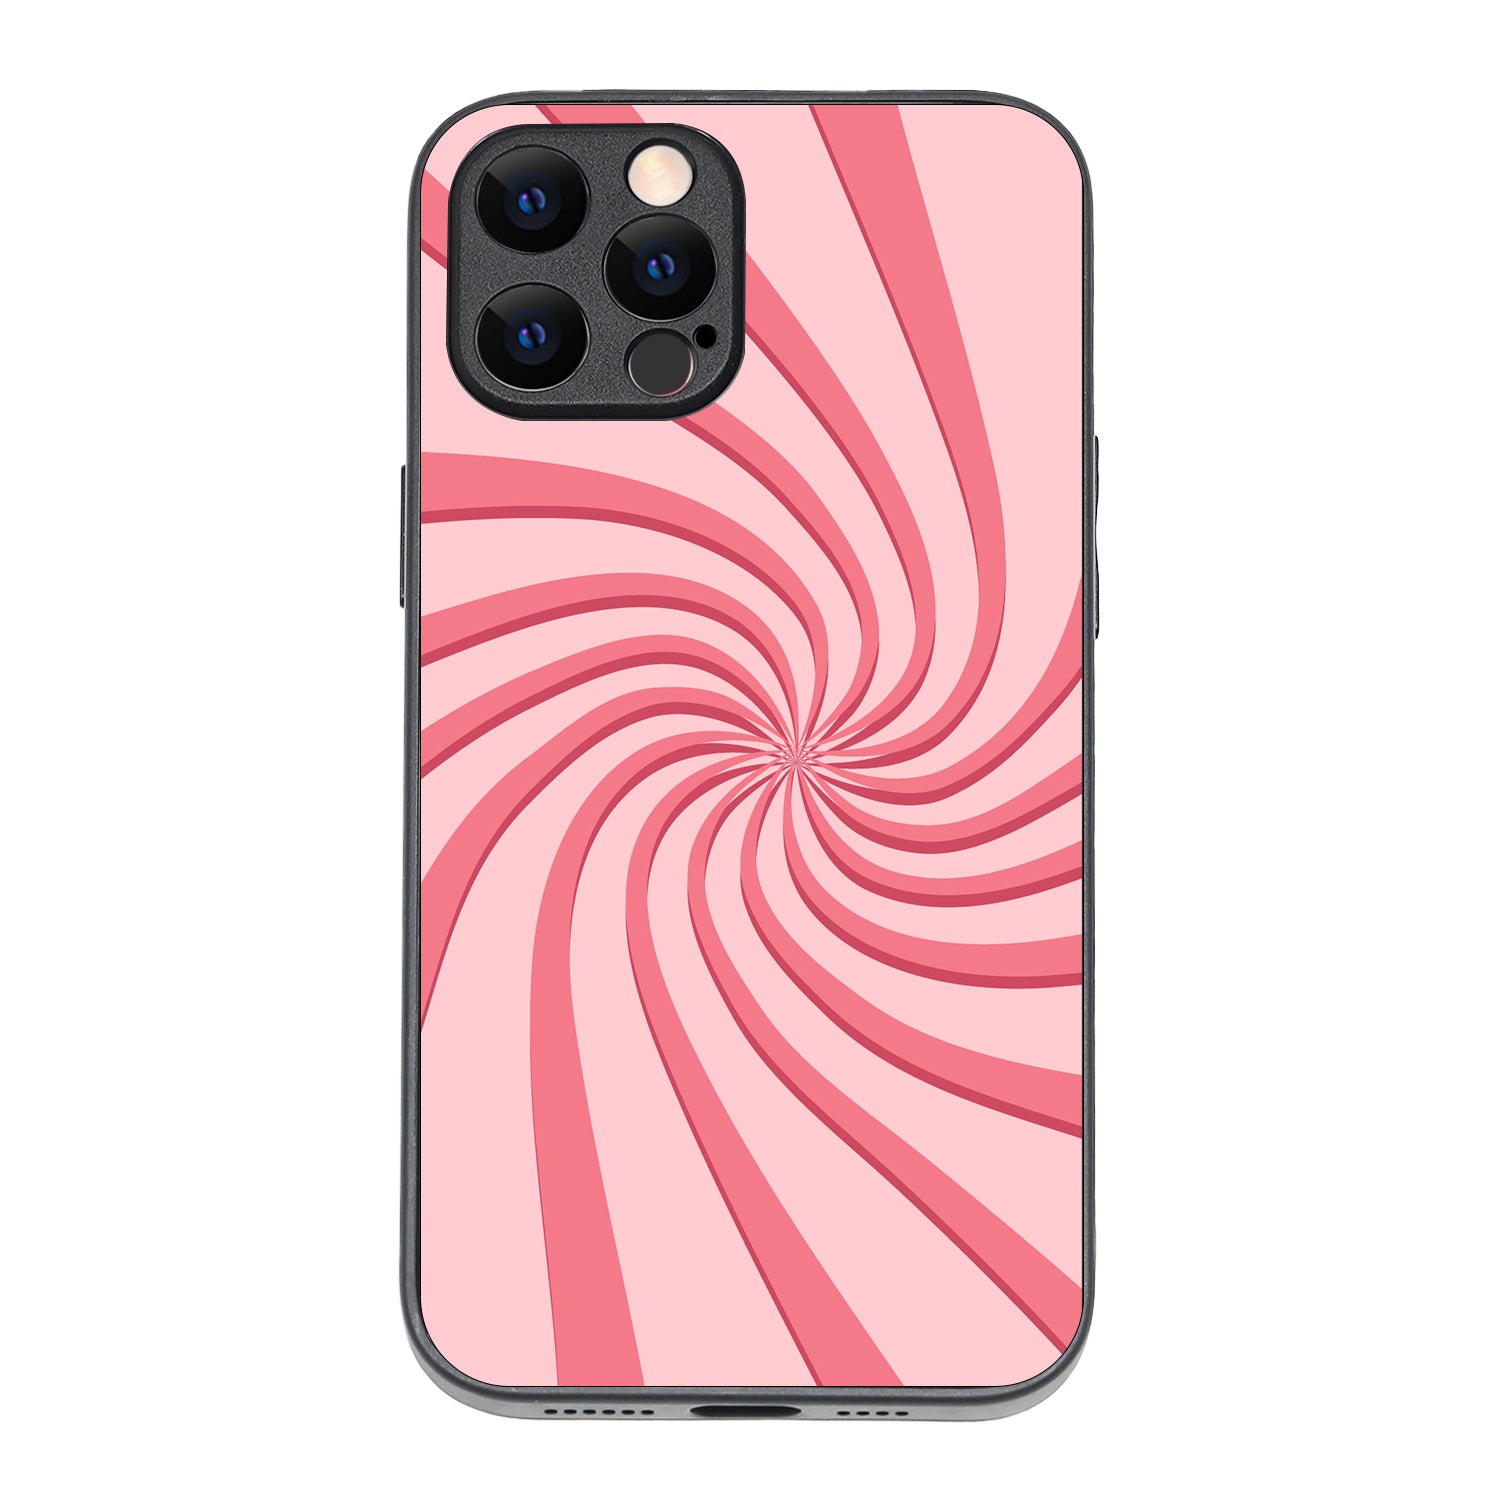 Spiral Optical Illusion iPhone 12 Pro Max Case